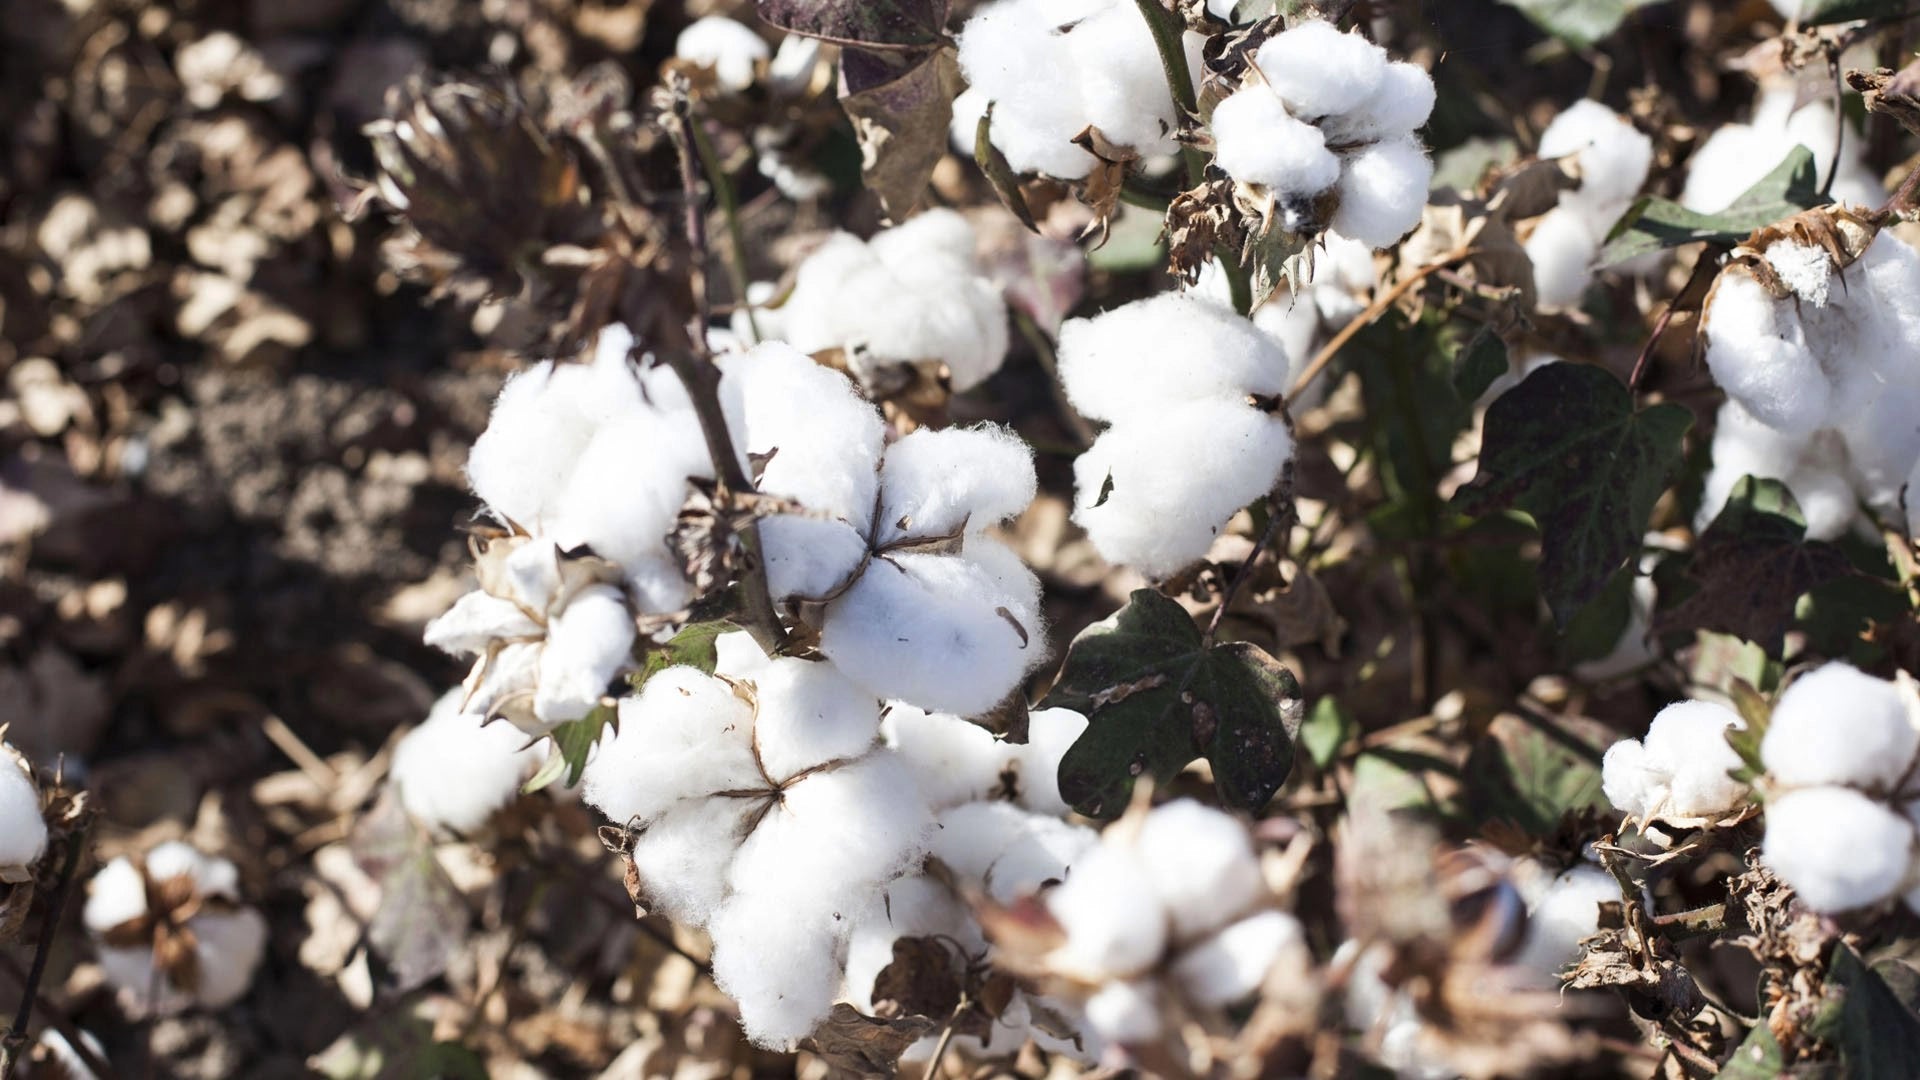 Why Organic cotton?